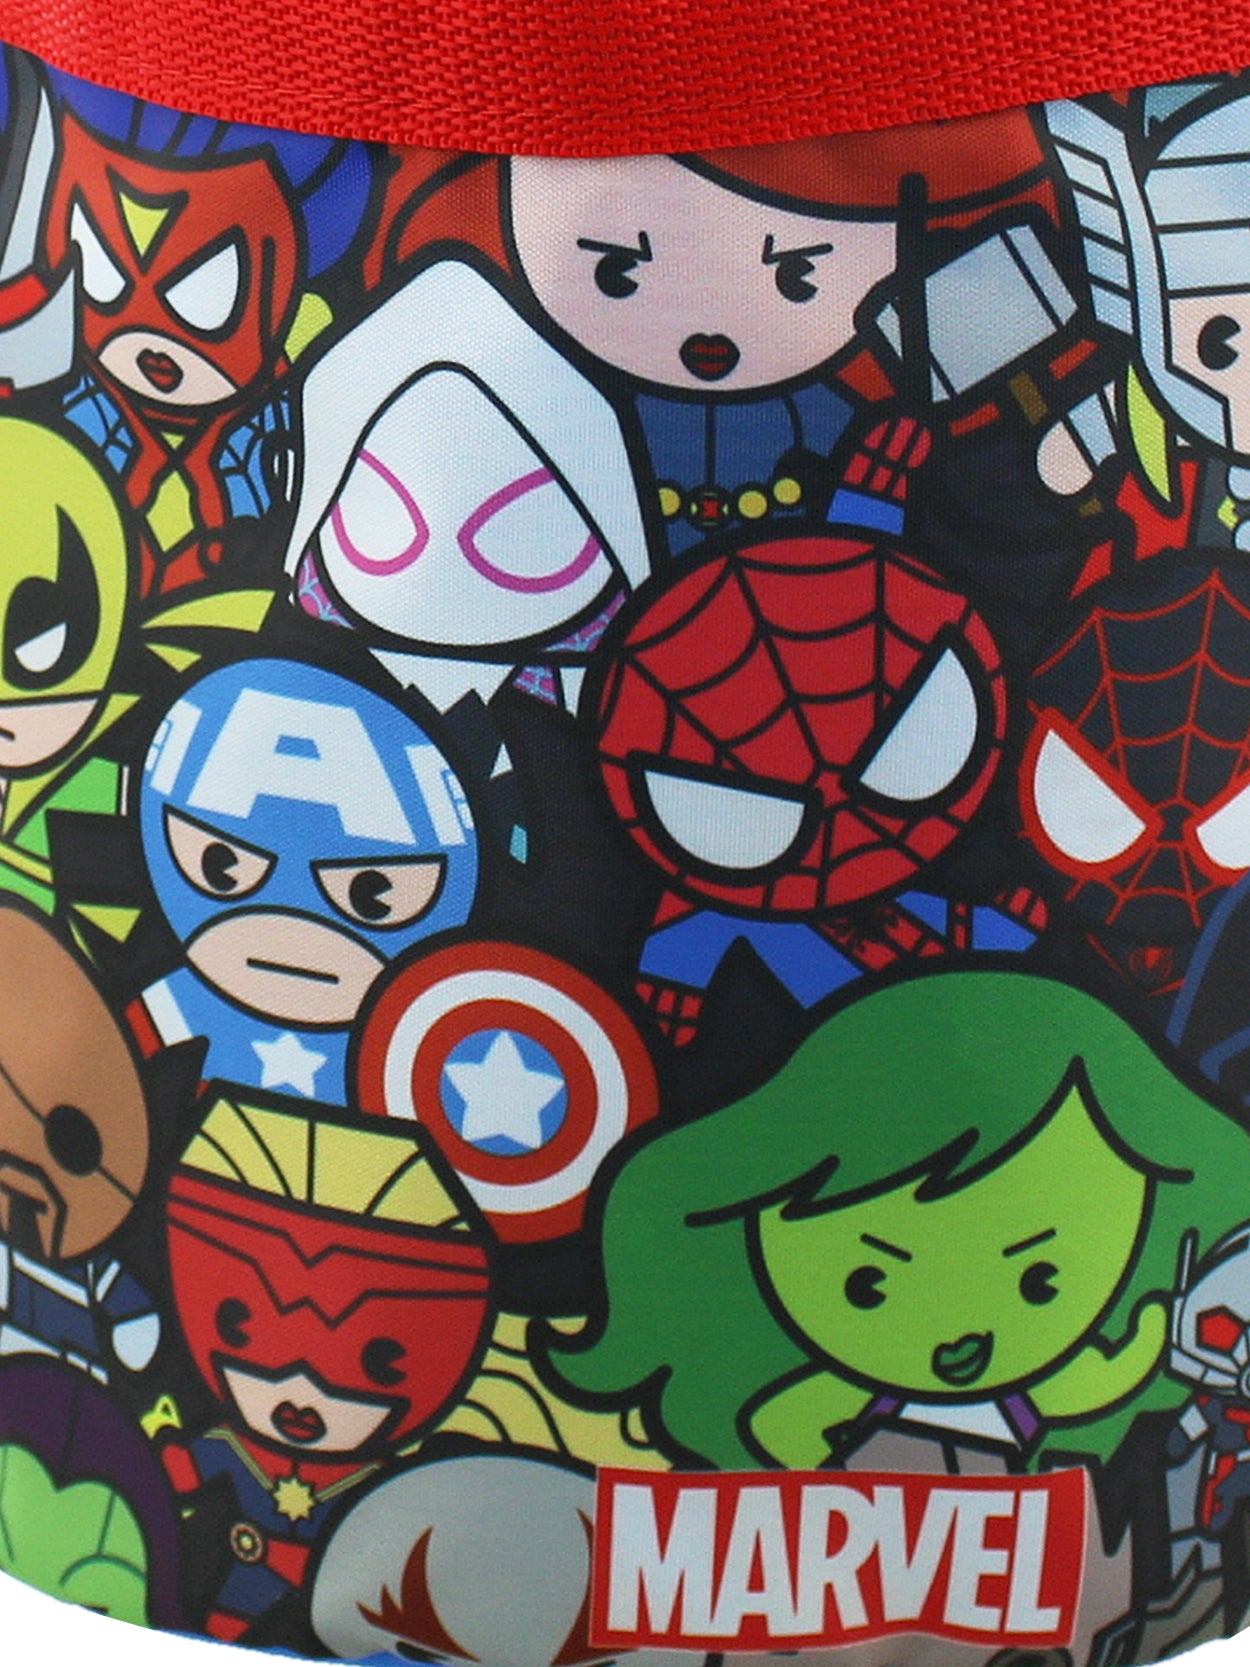 MARVEL Avengers Backpack Comics Spiderman Hulk Thor Ironman Capt America |  eBay